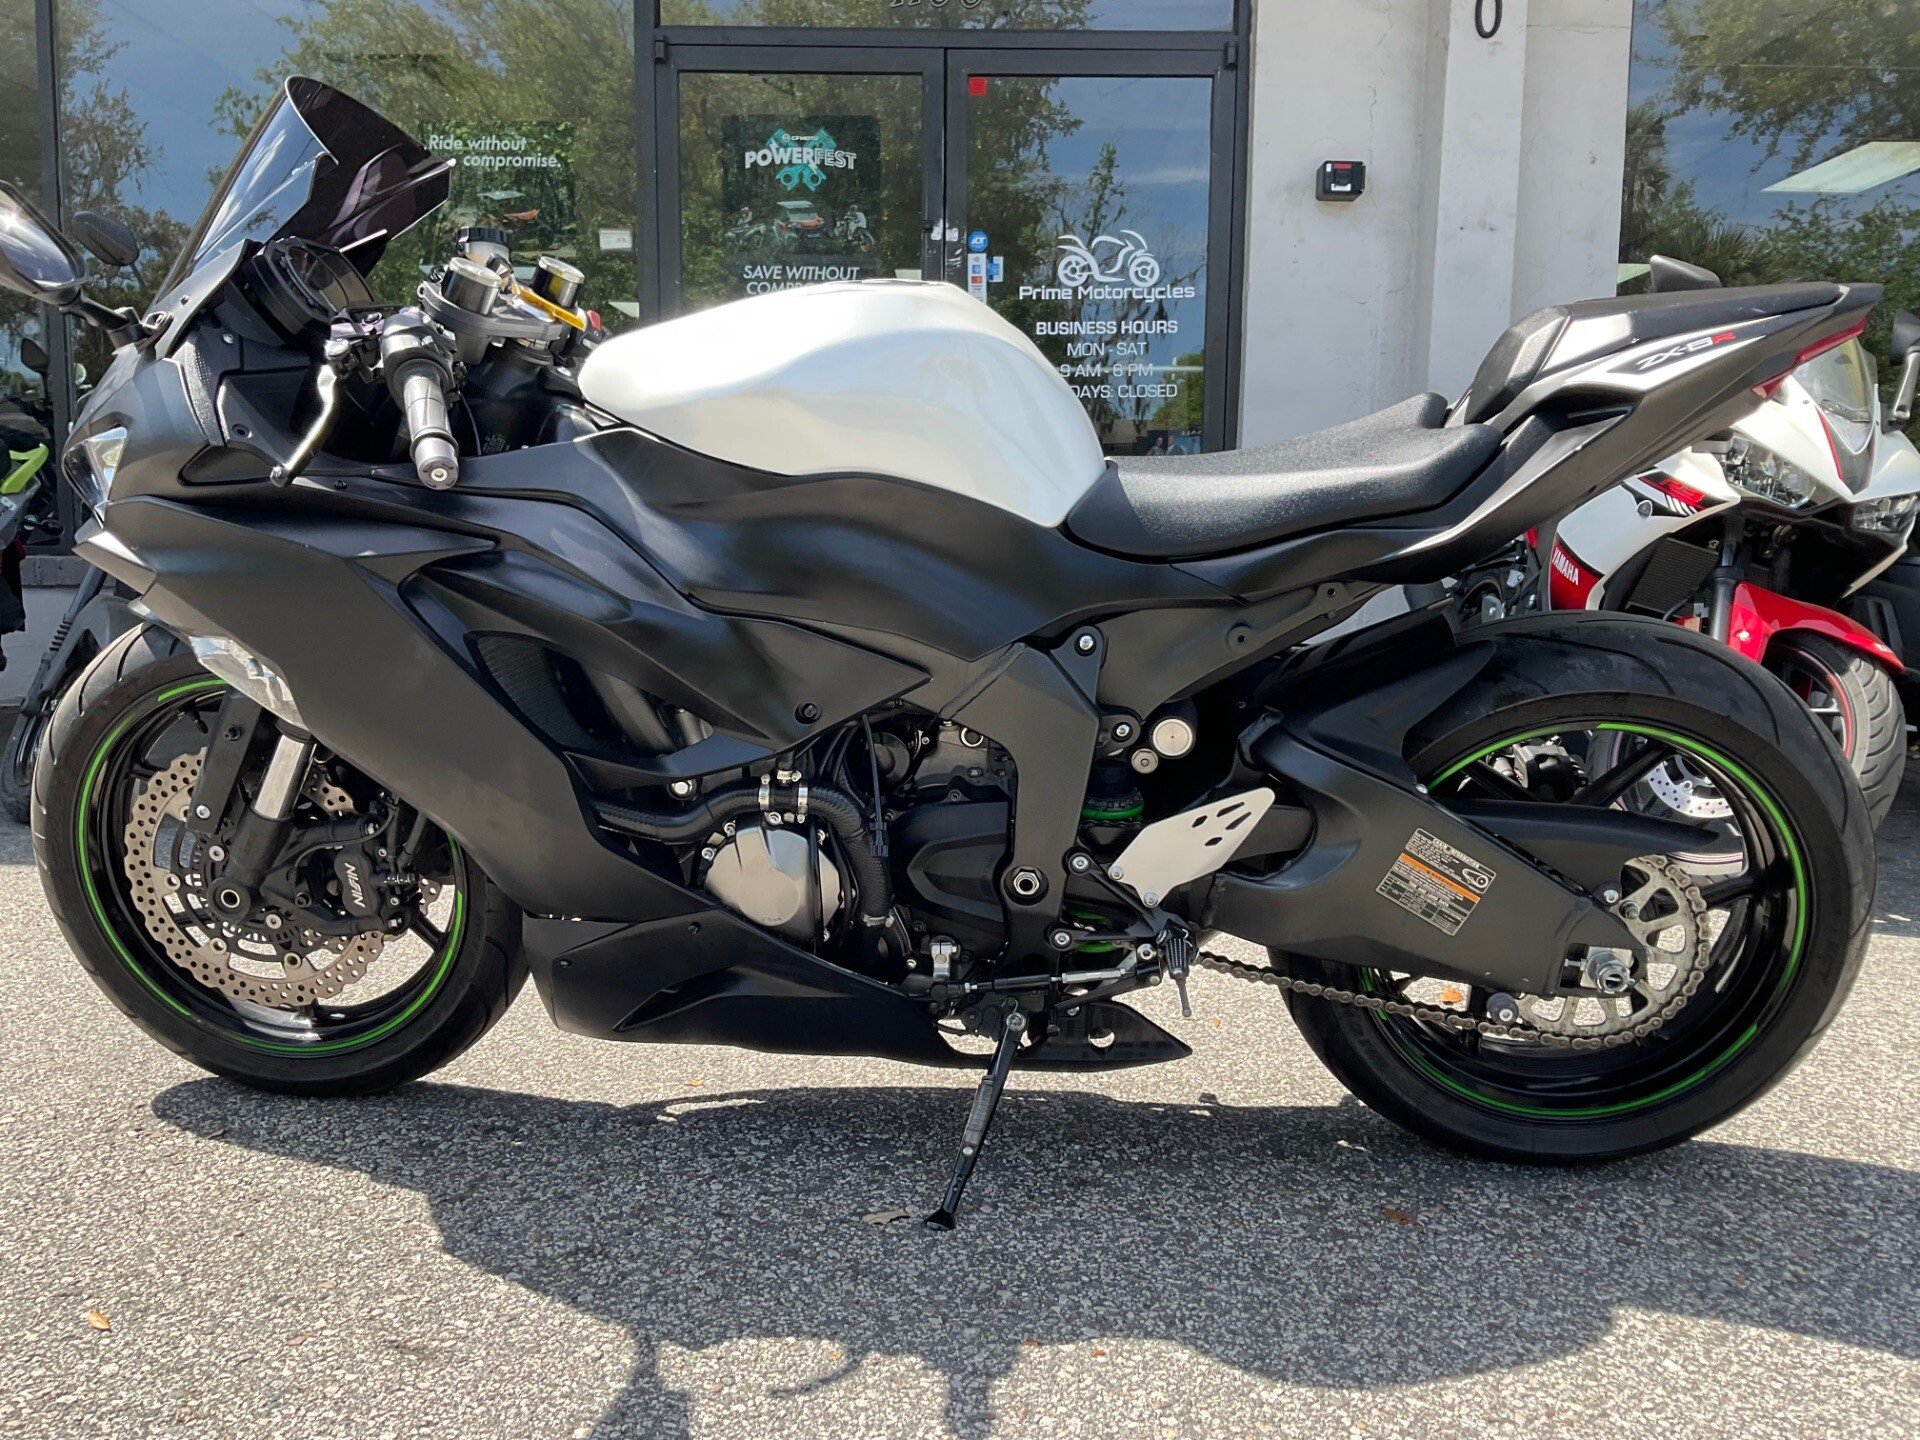 2021 Kawasaki Ninja ZX-6R Motorcycles for Sale near Los Angeles 